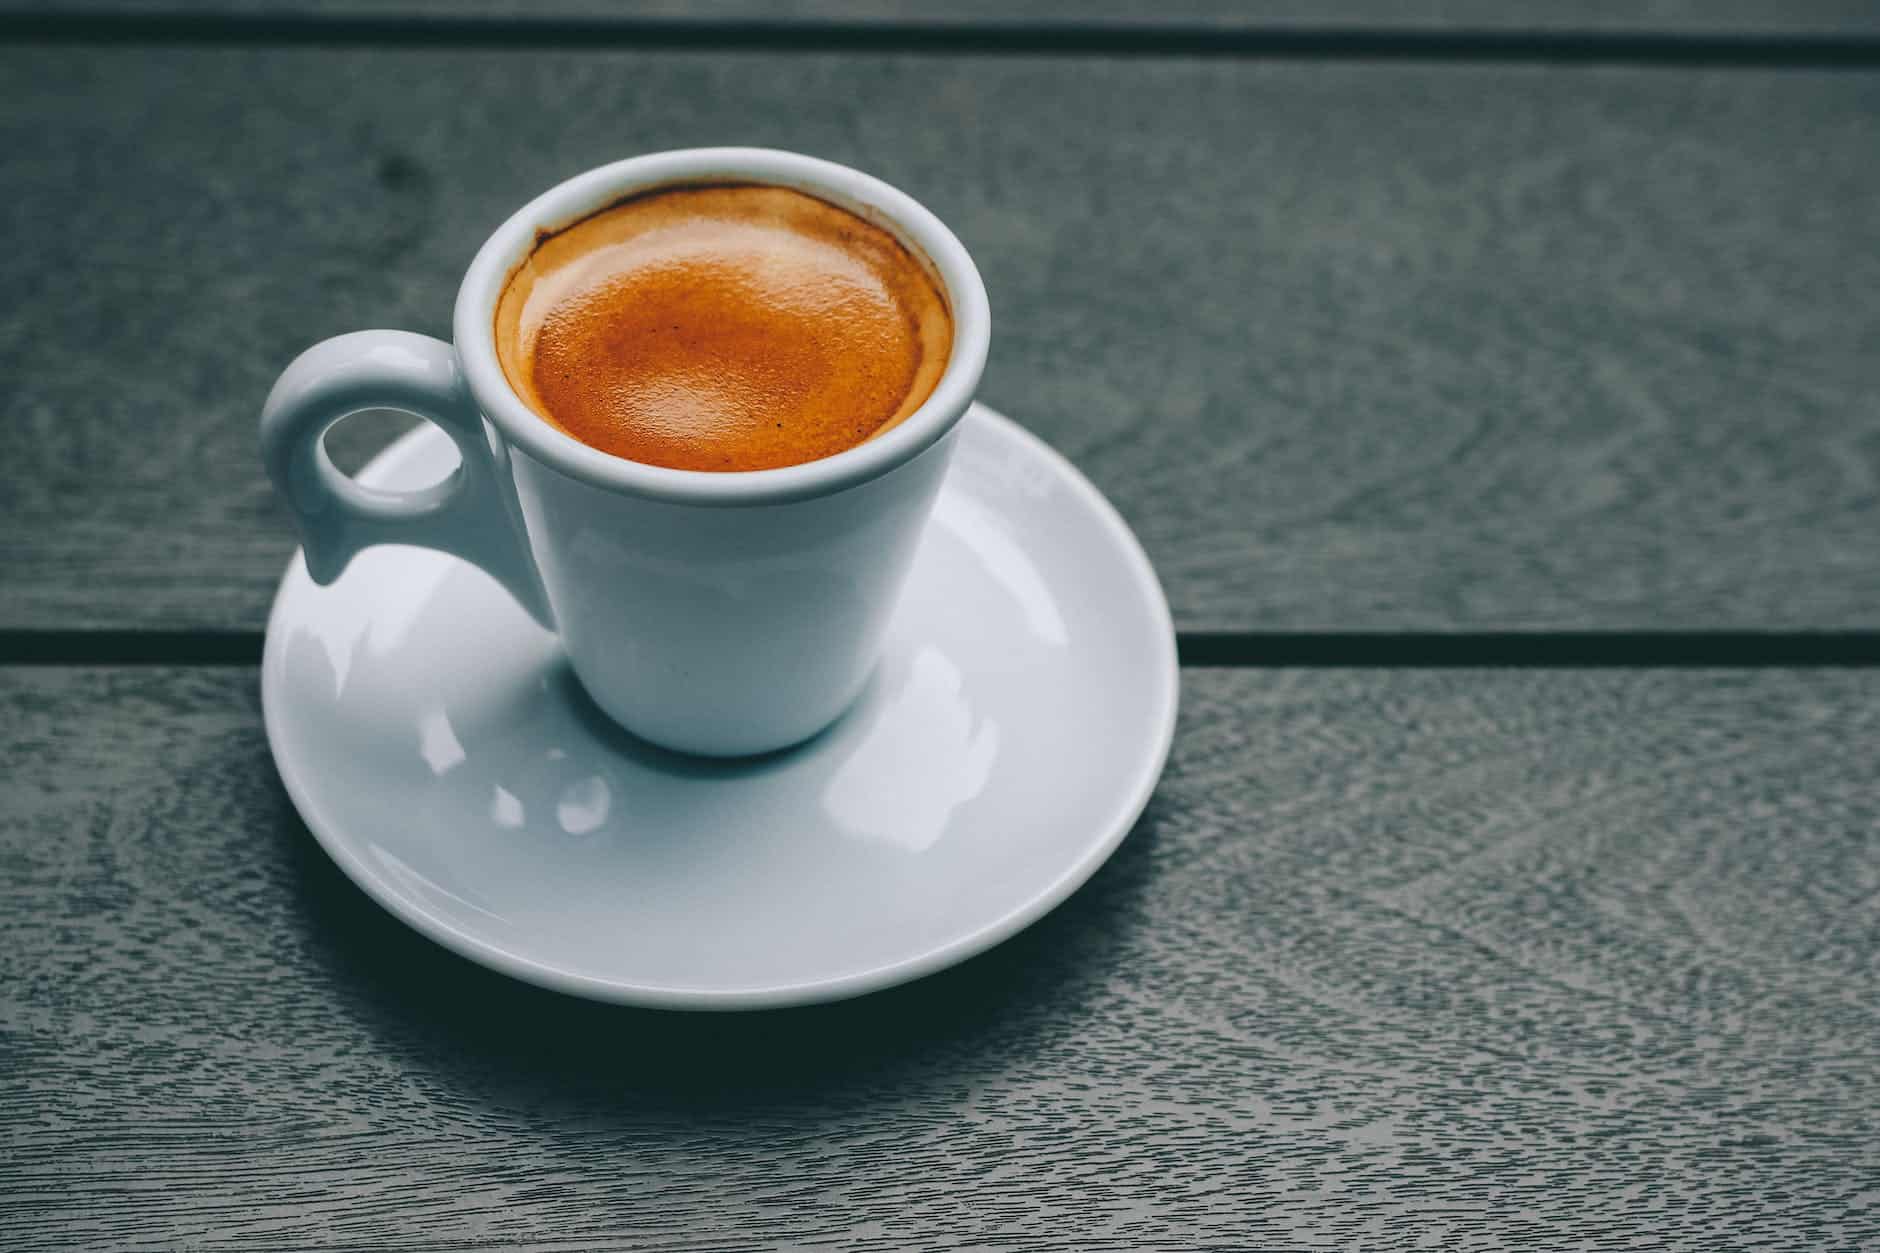 Why is the Espresso So Small?